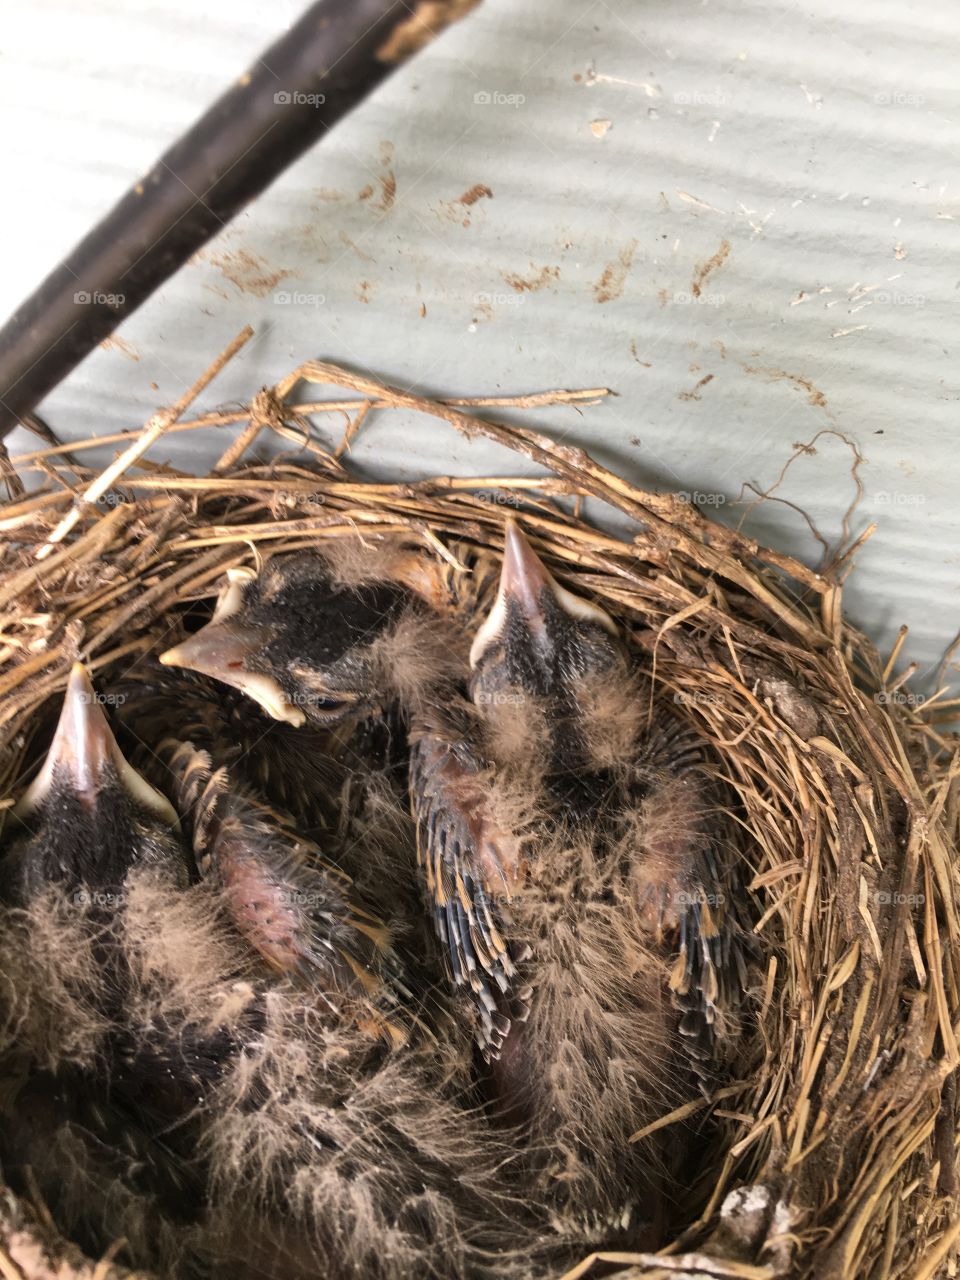 Robin chicks in a nest. 